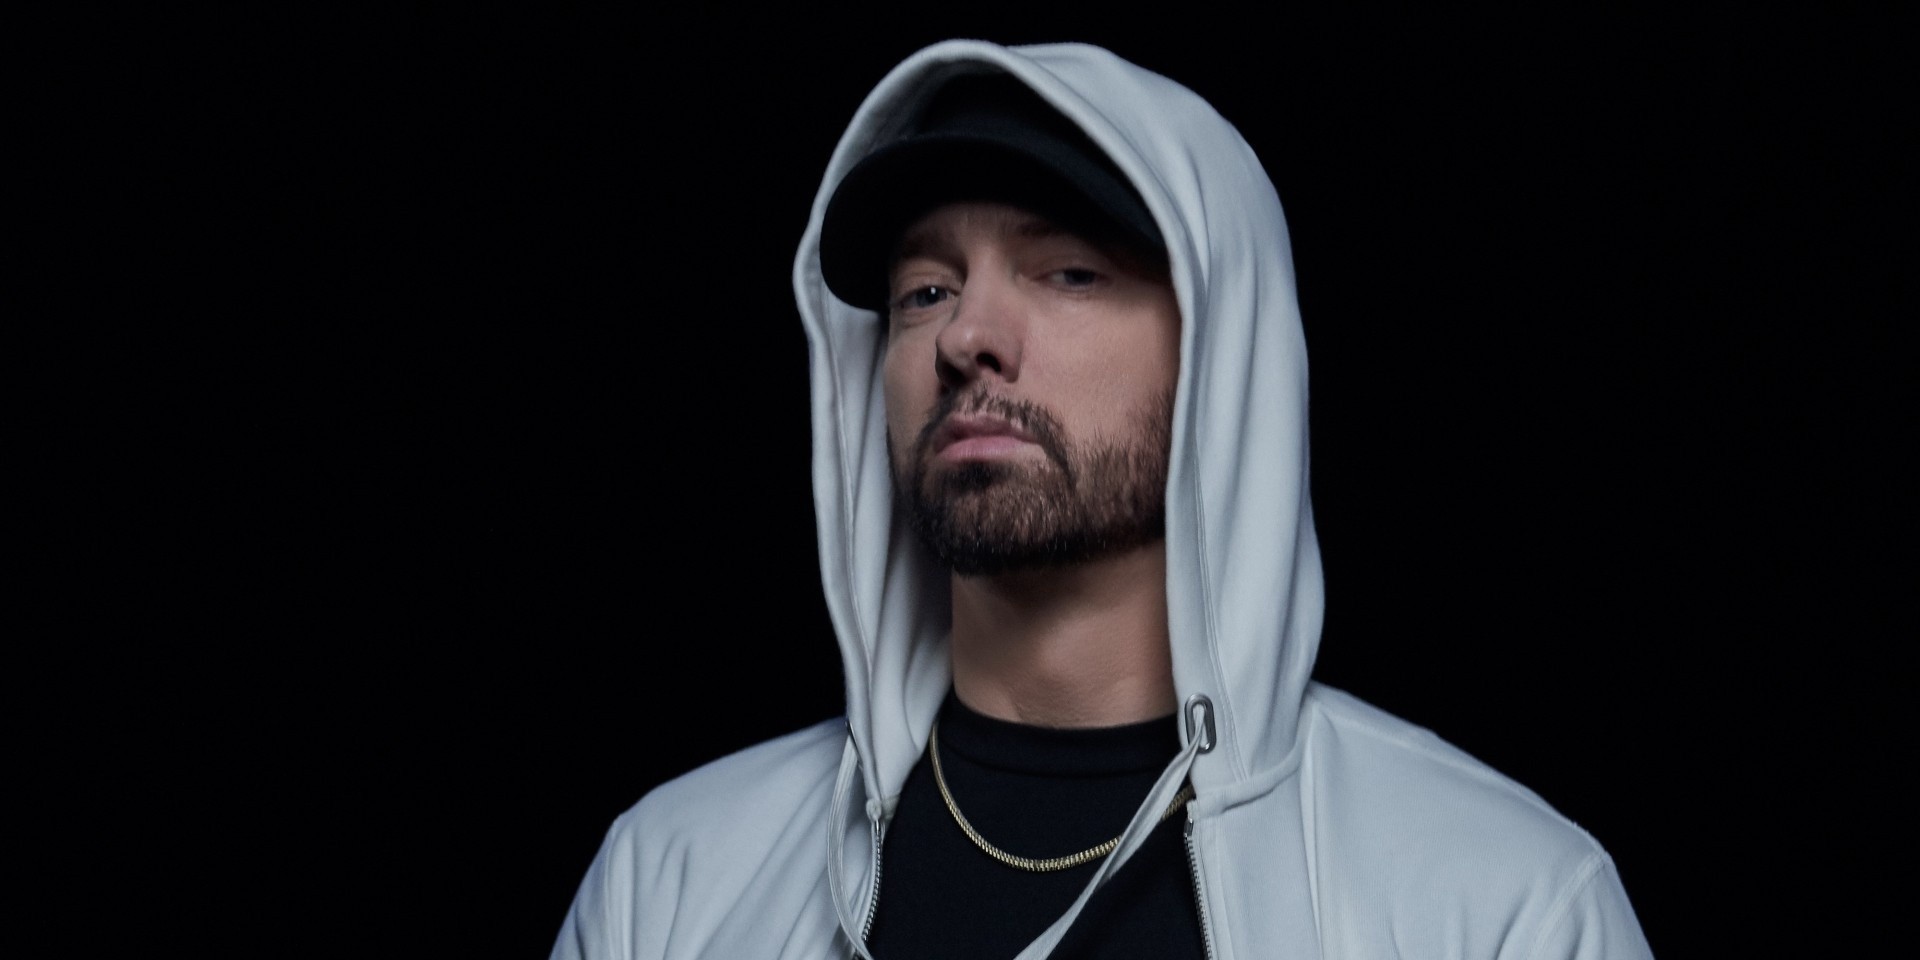 Eminem releases surprise album Kamikaze - listen